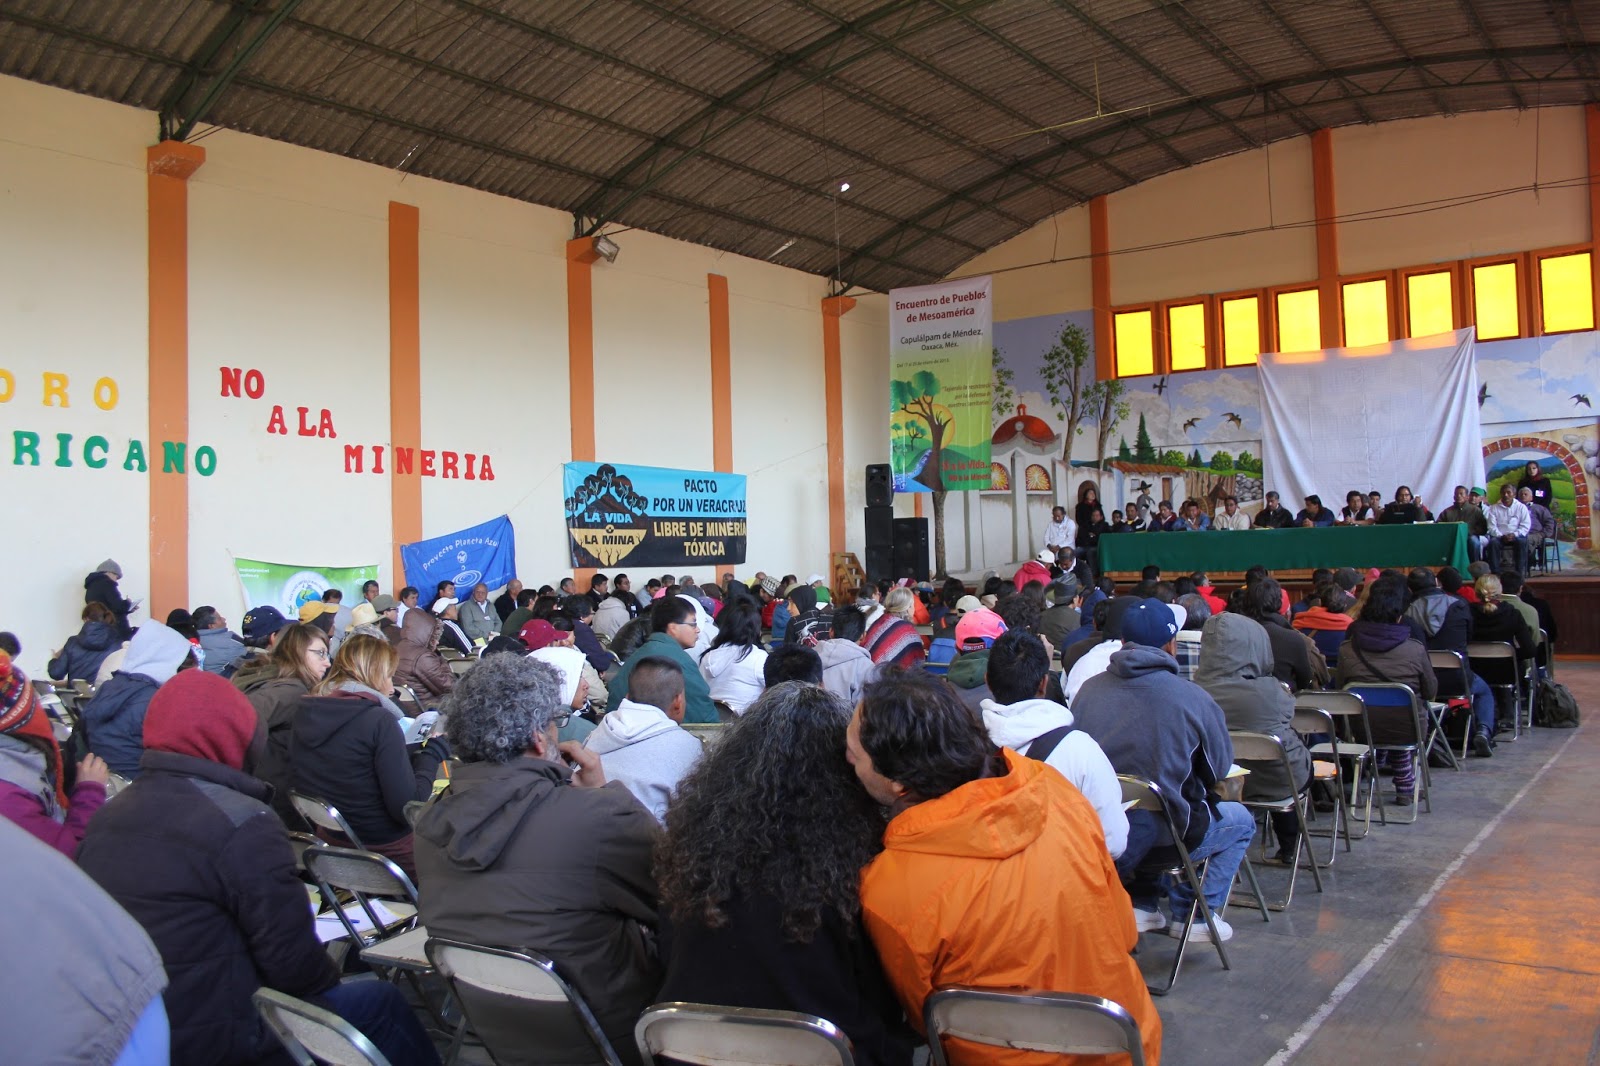 http://1.bp.blogspot.com/-rv92KYGmW2c/UP7hOaYM6DI/AAAAAAAAAxU/BFyaIbgmrj4/s1600/Encuentro+Mesoamericano+vs+Mineria+Calpulalpam+2013-004.JPG